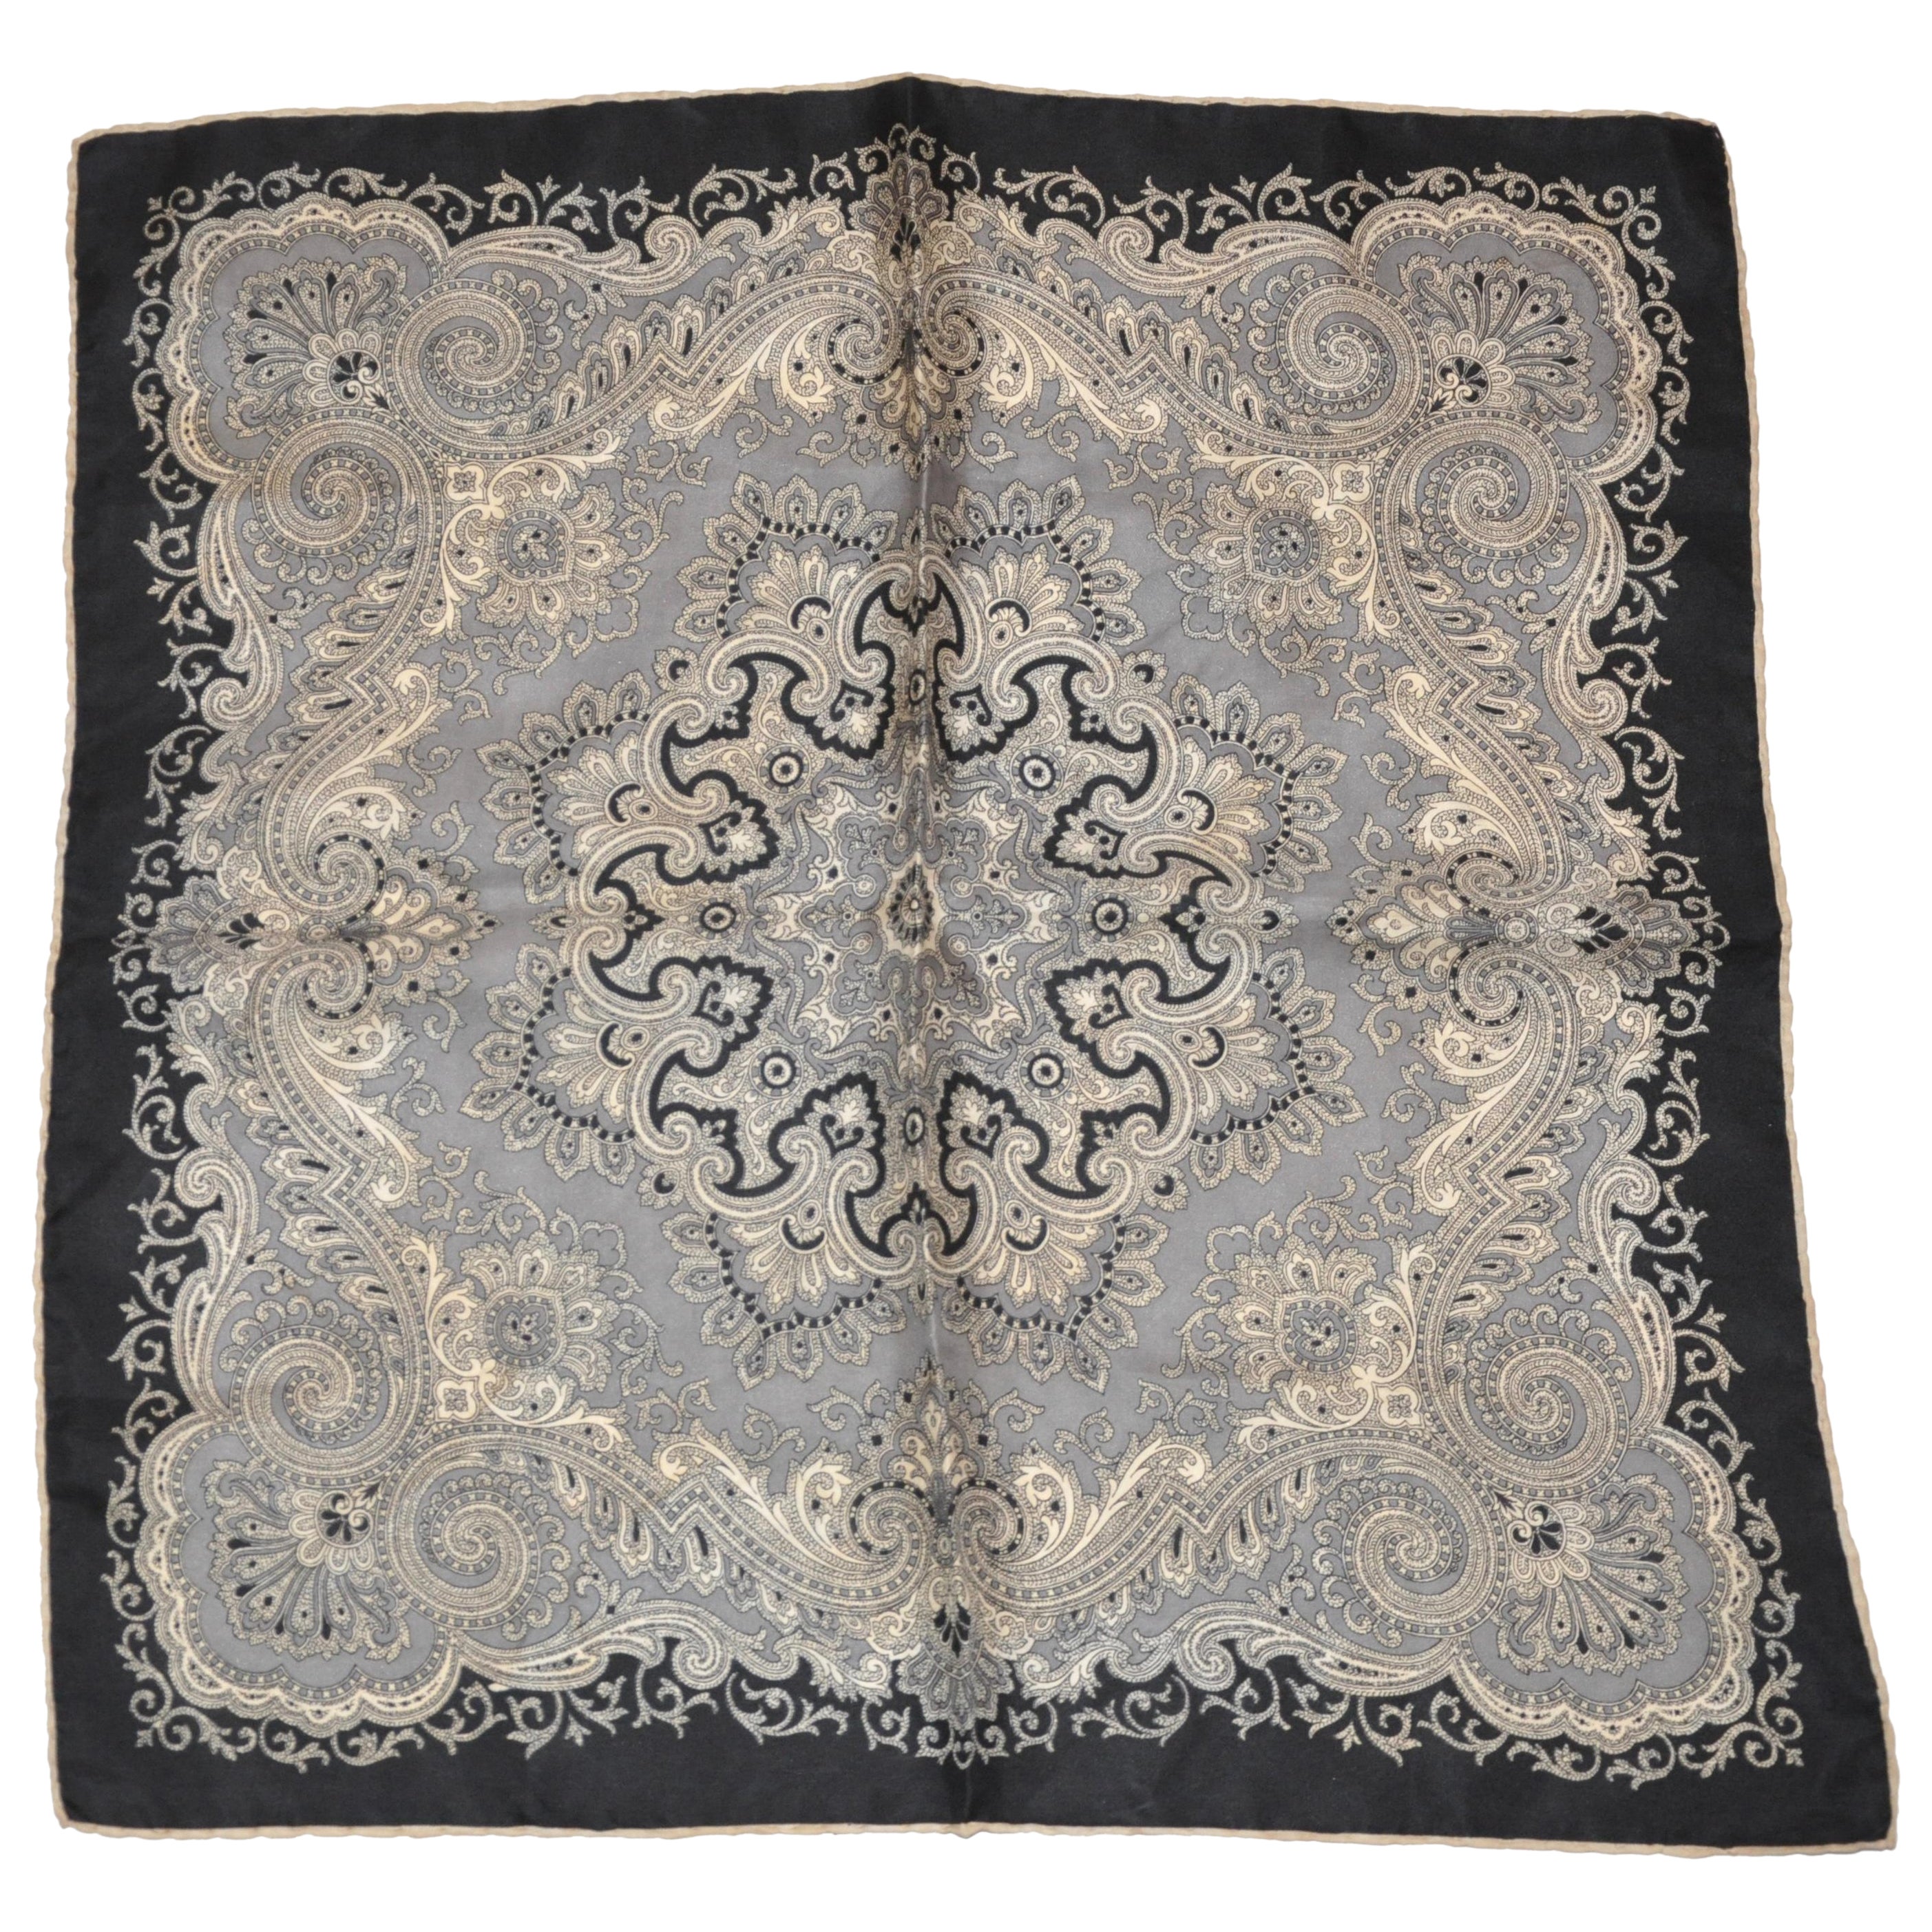 Black Borders "Blooming Paisley" Silk Handkerchief